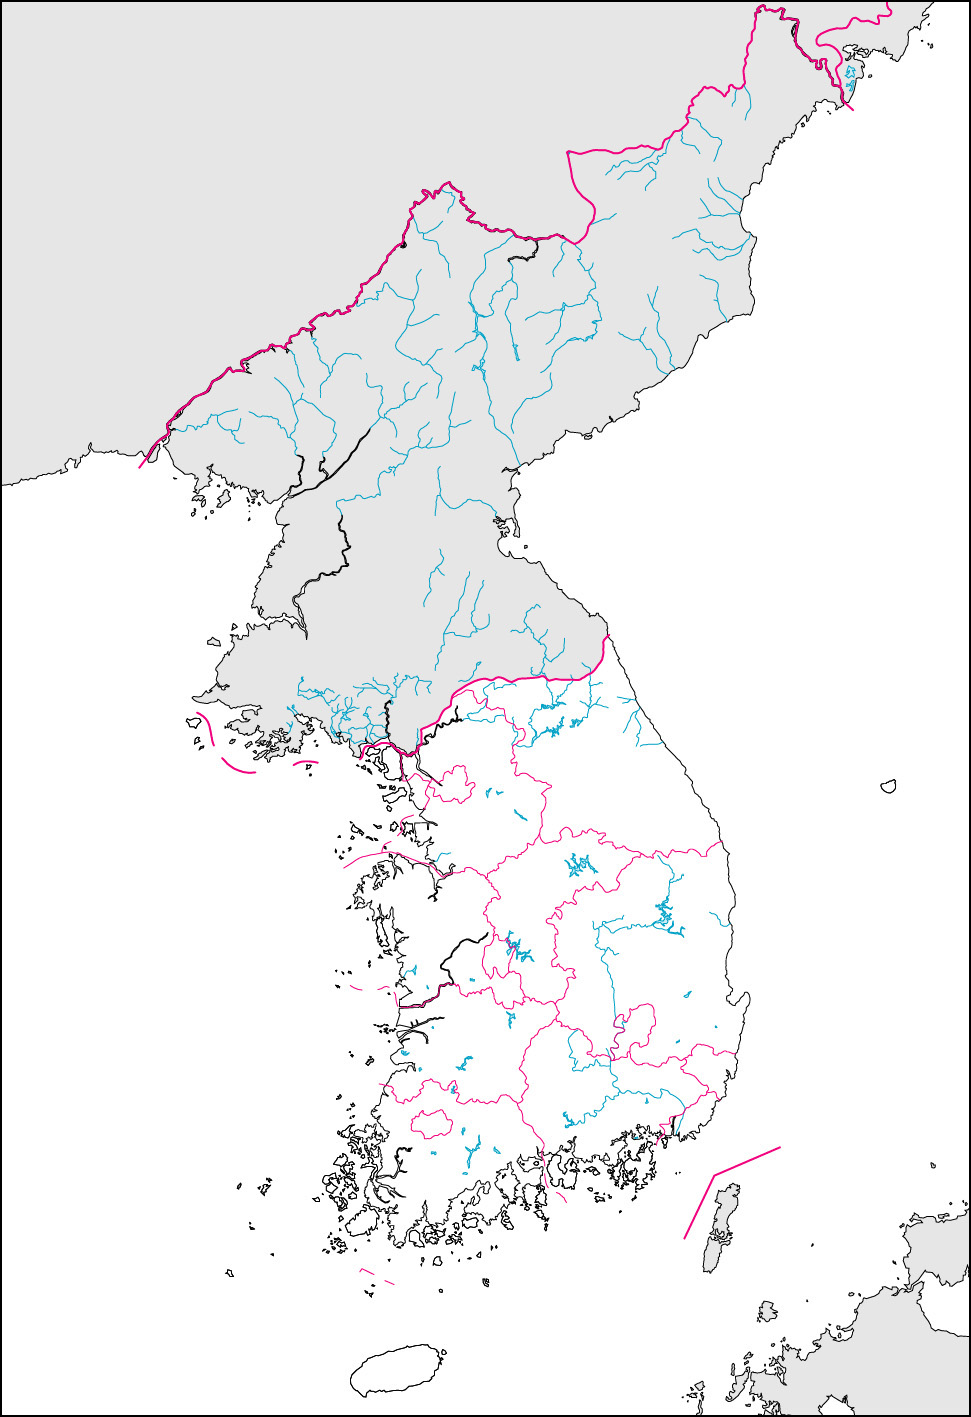 韓国白地図(行政区分記載)の画像